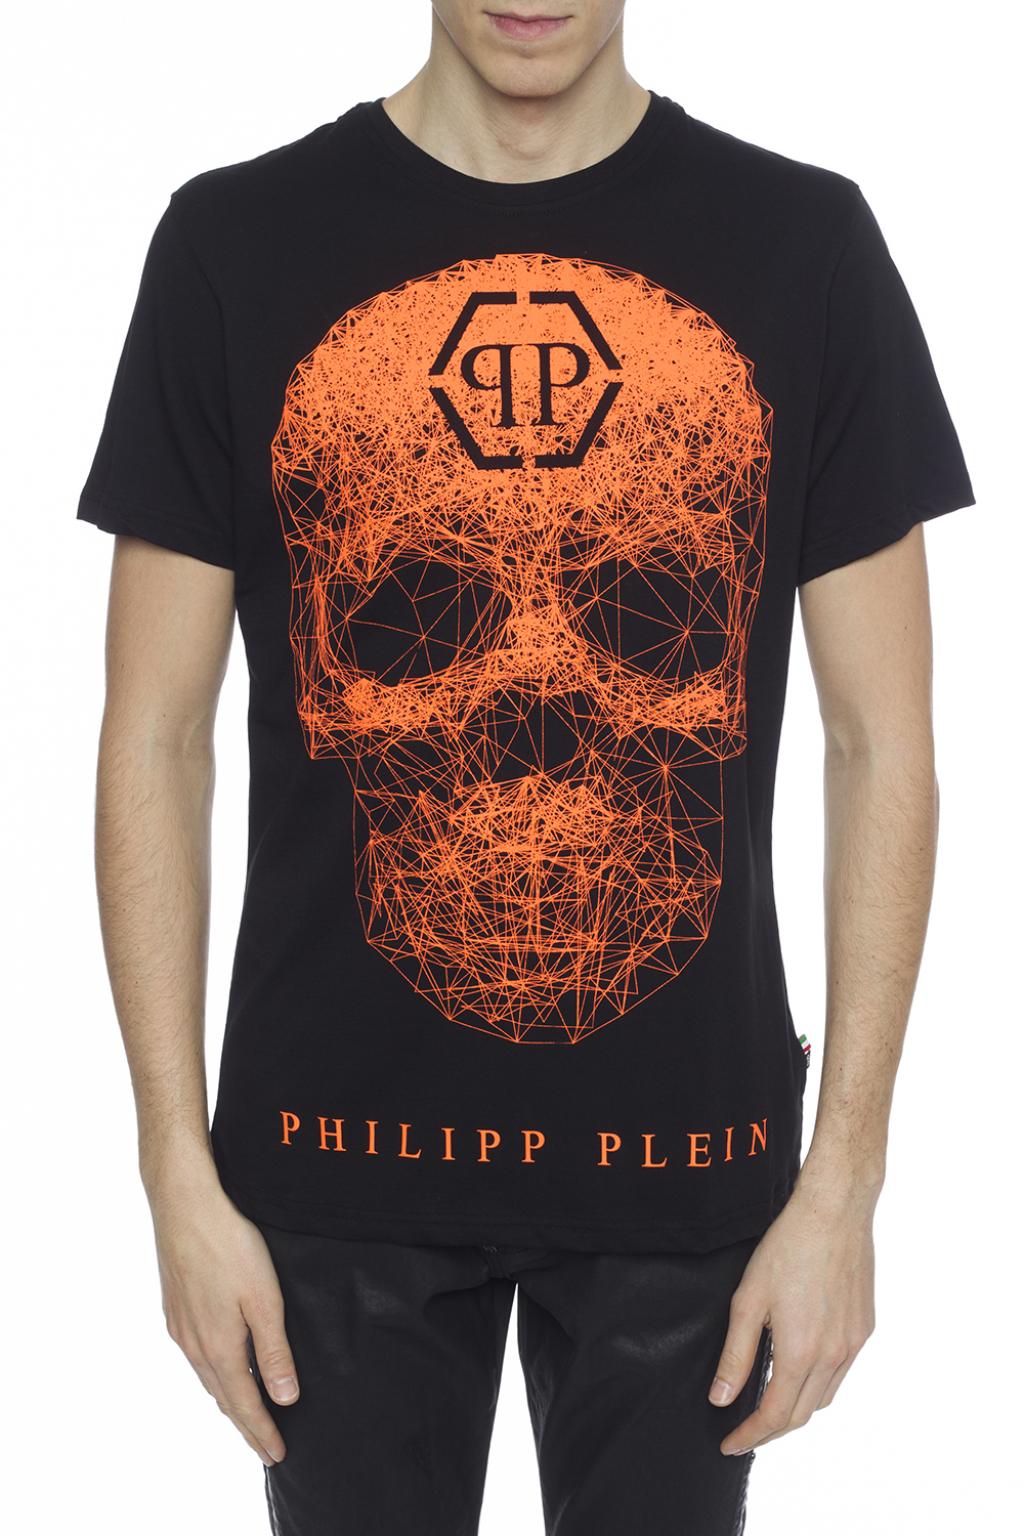 philipp plein t shirt red skull